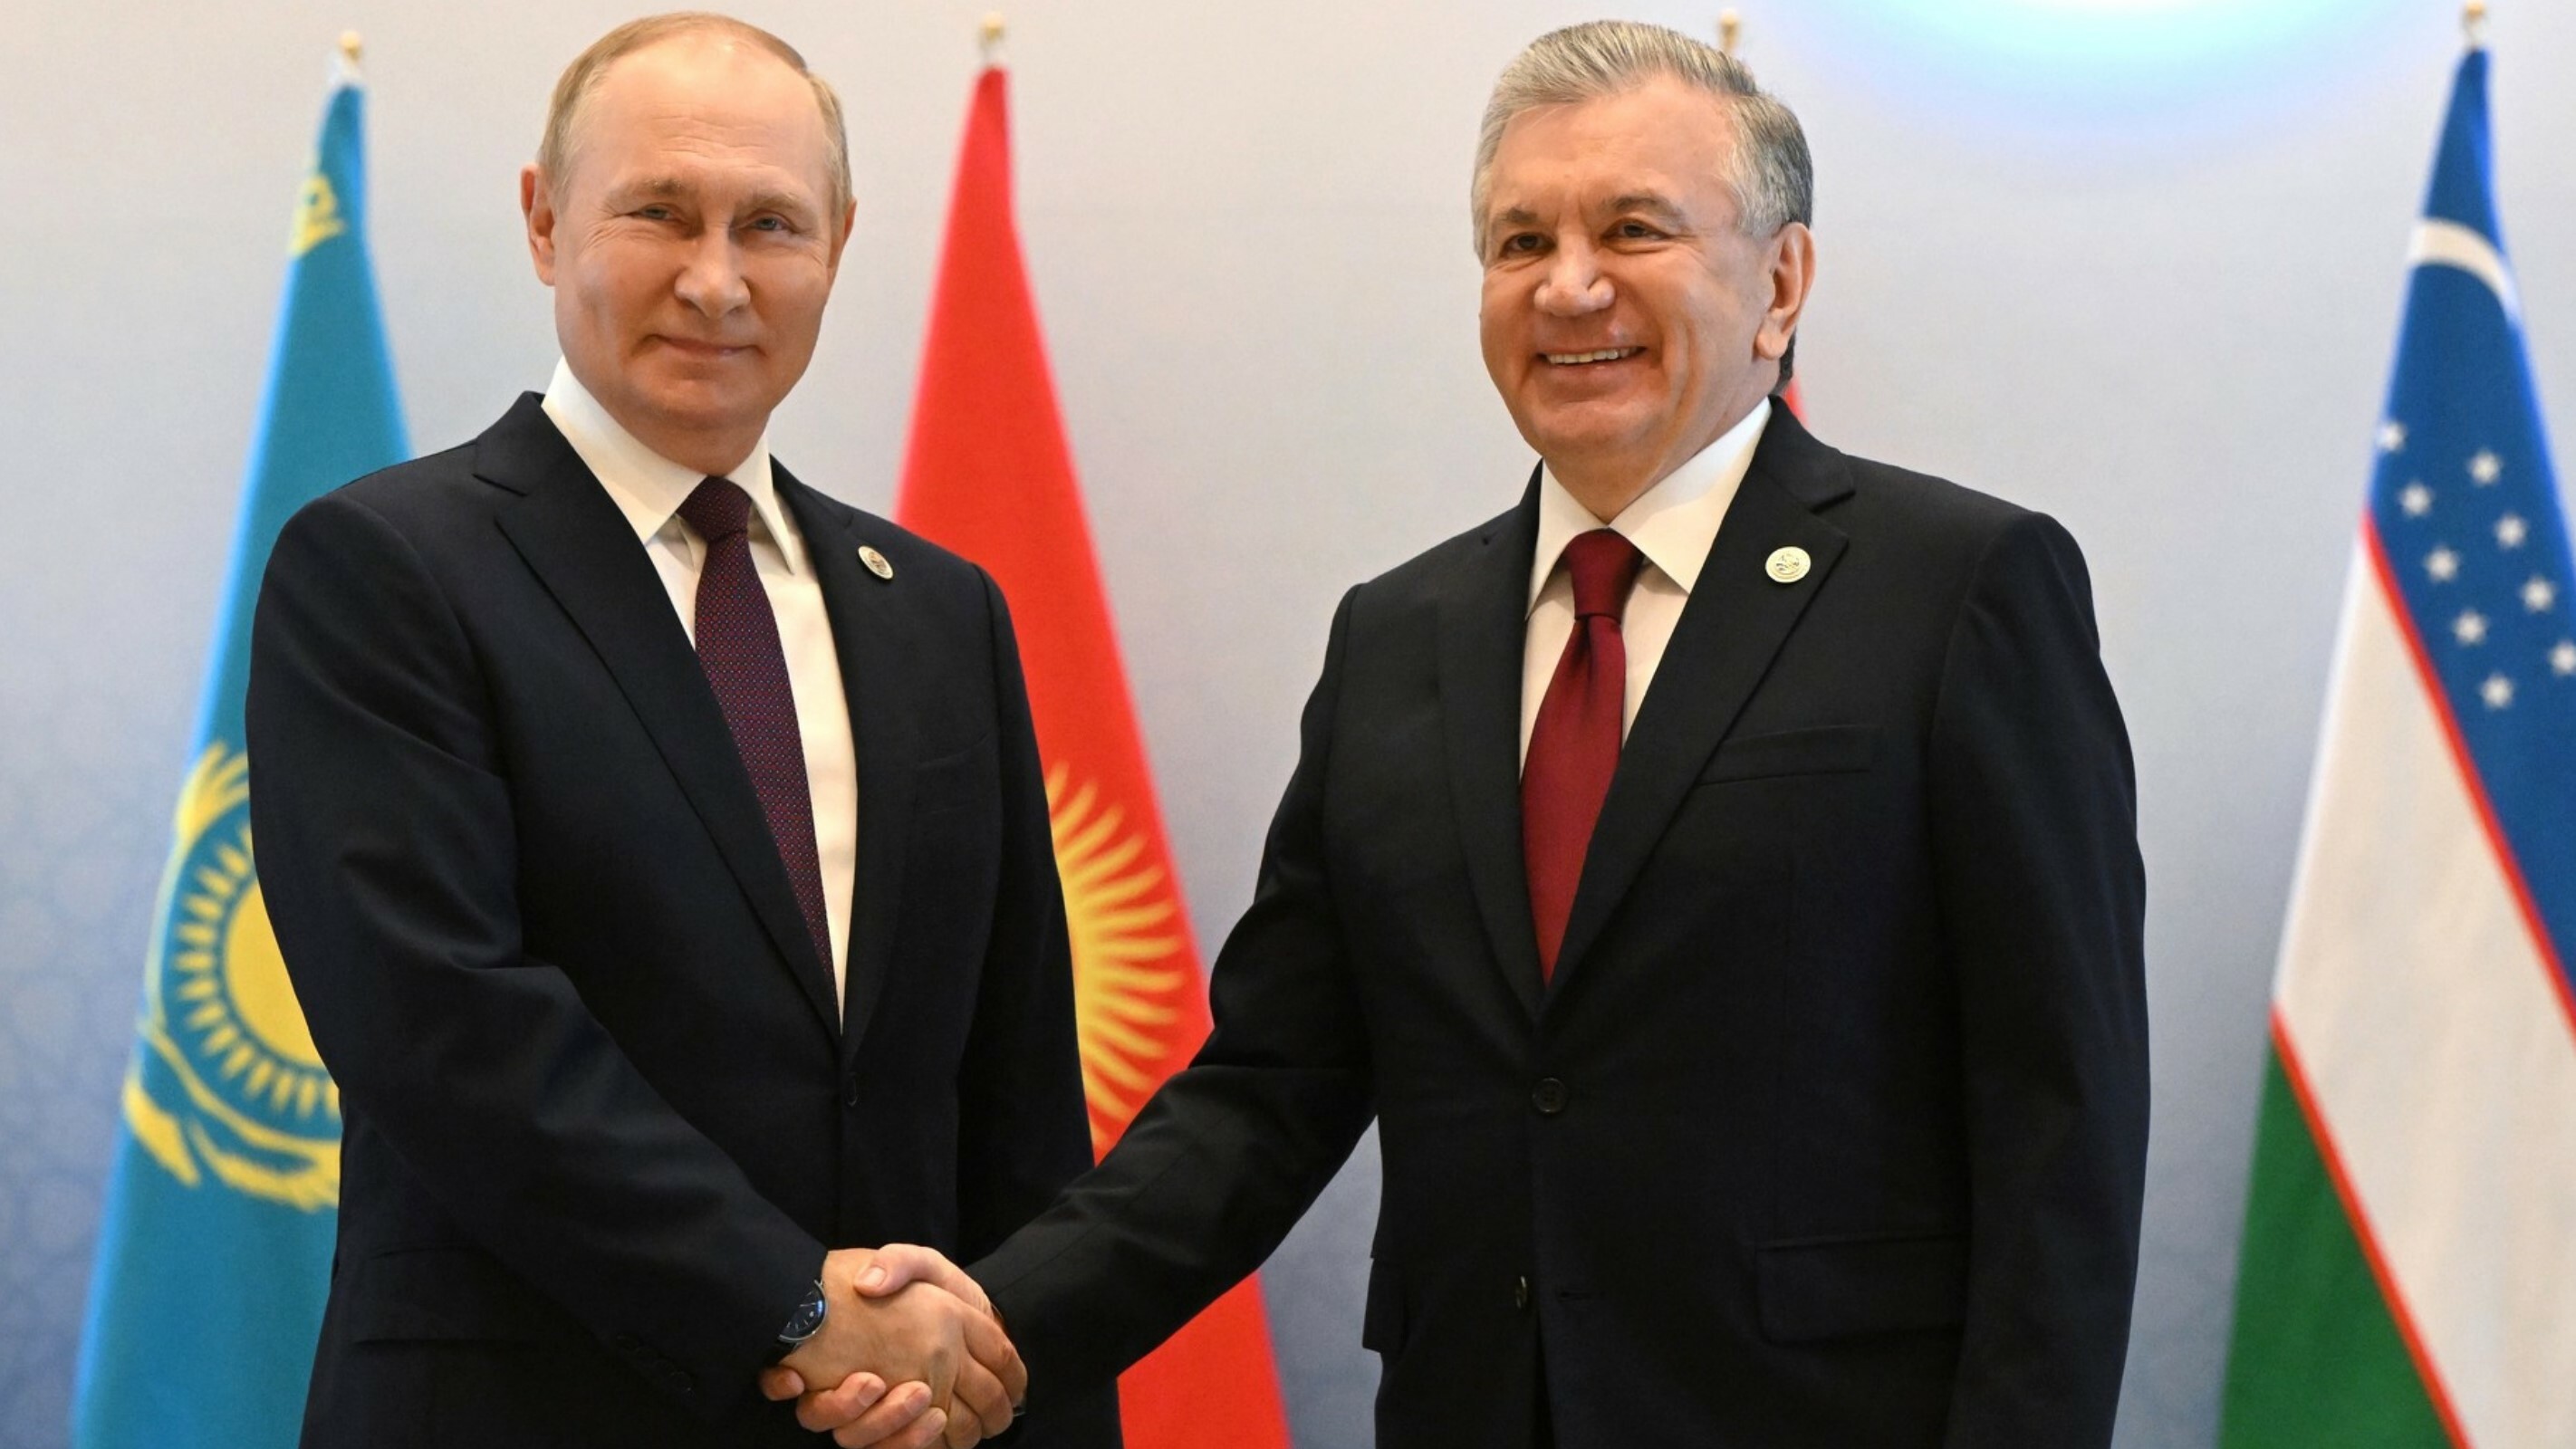 Шавкат Мирзиёев поздравил Владимира Путина с переизбранием на пост президента России